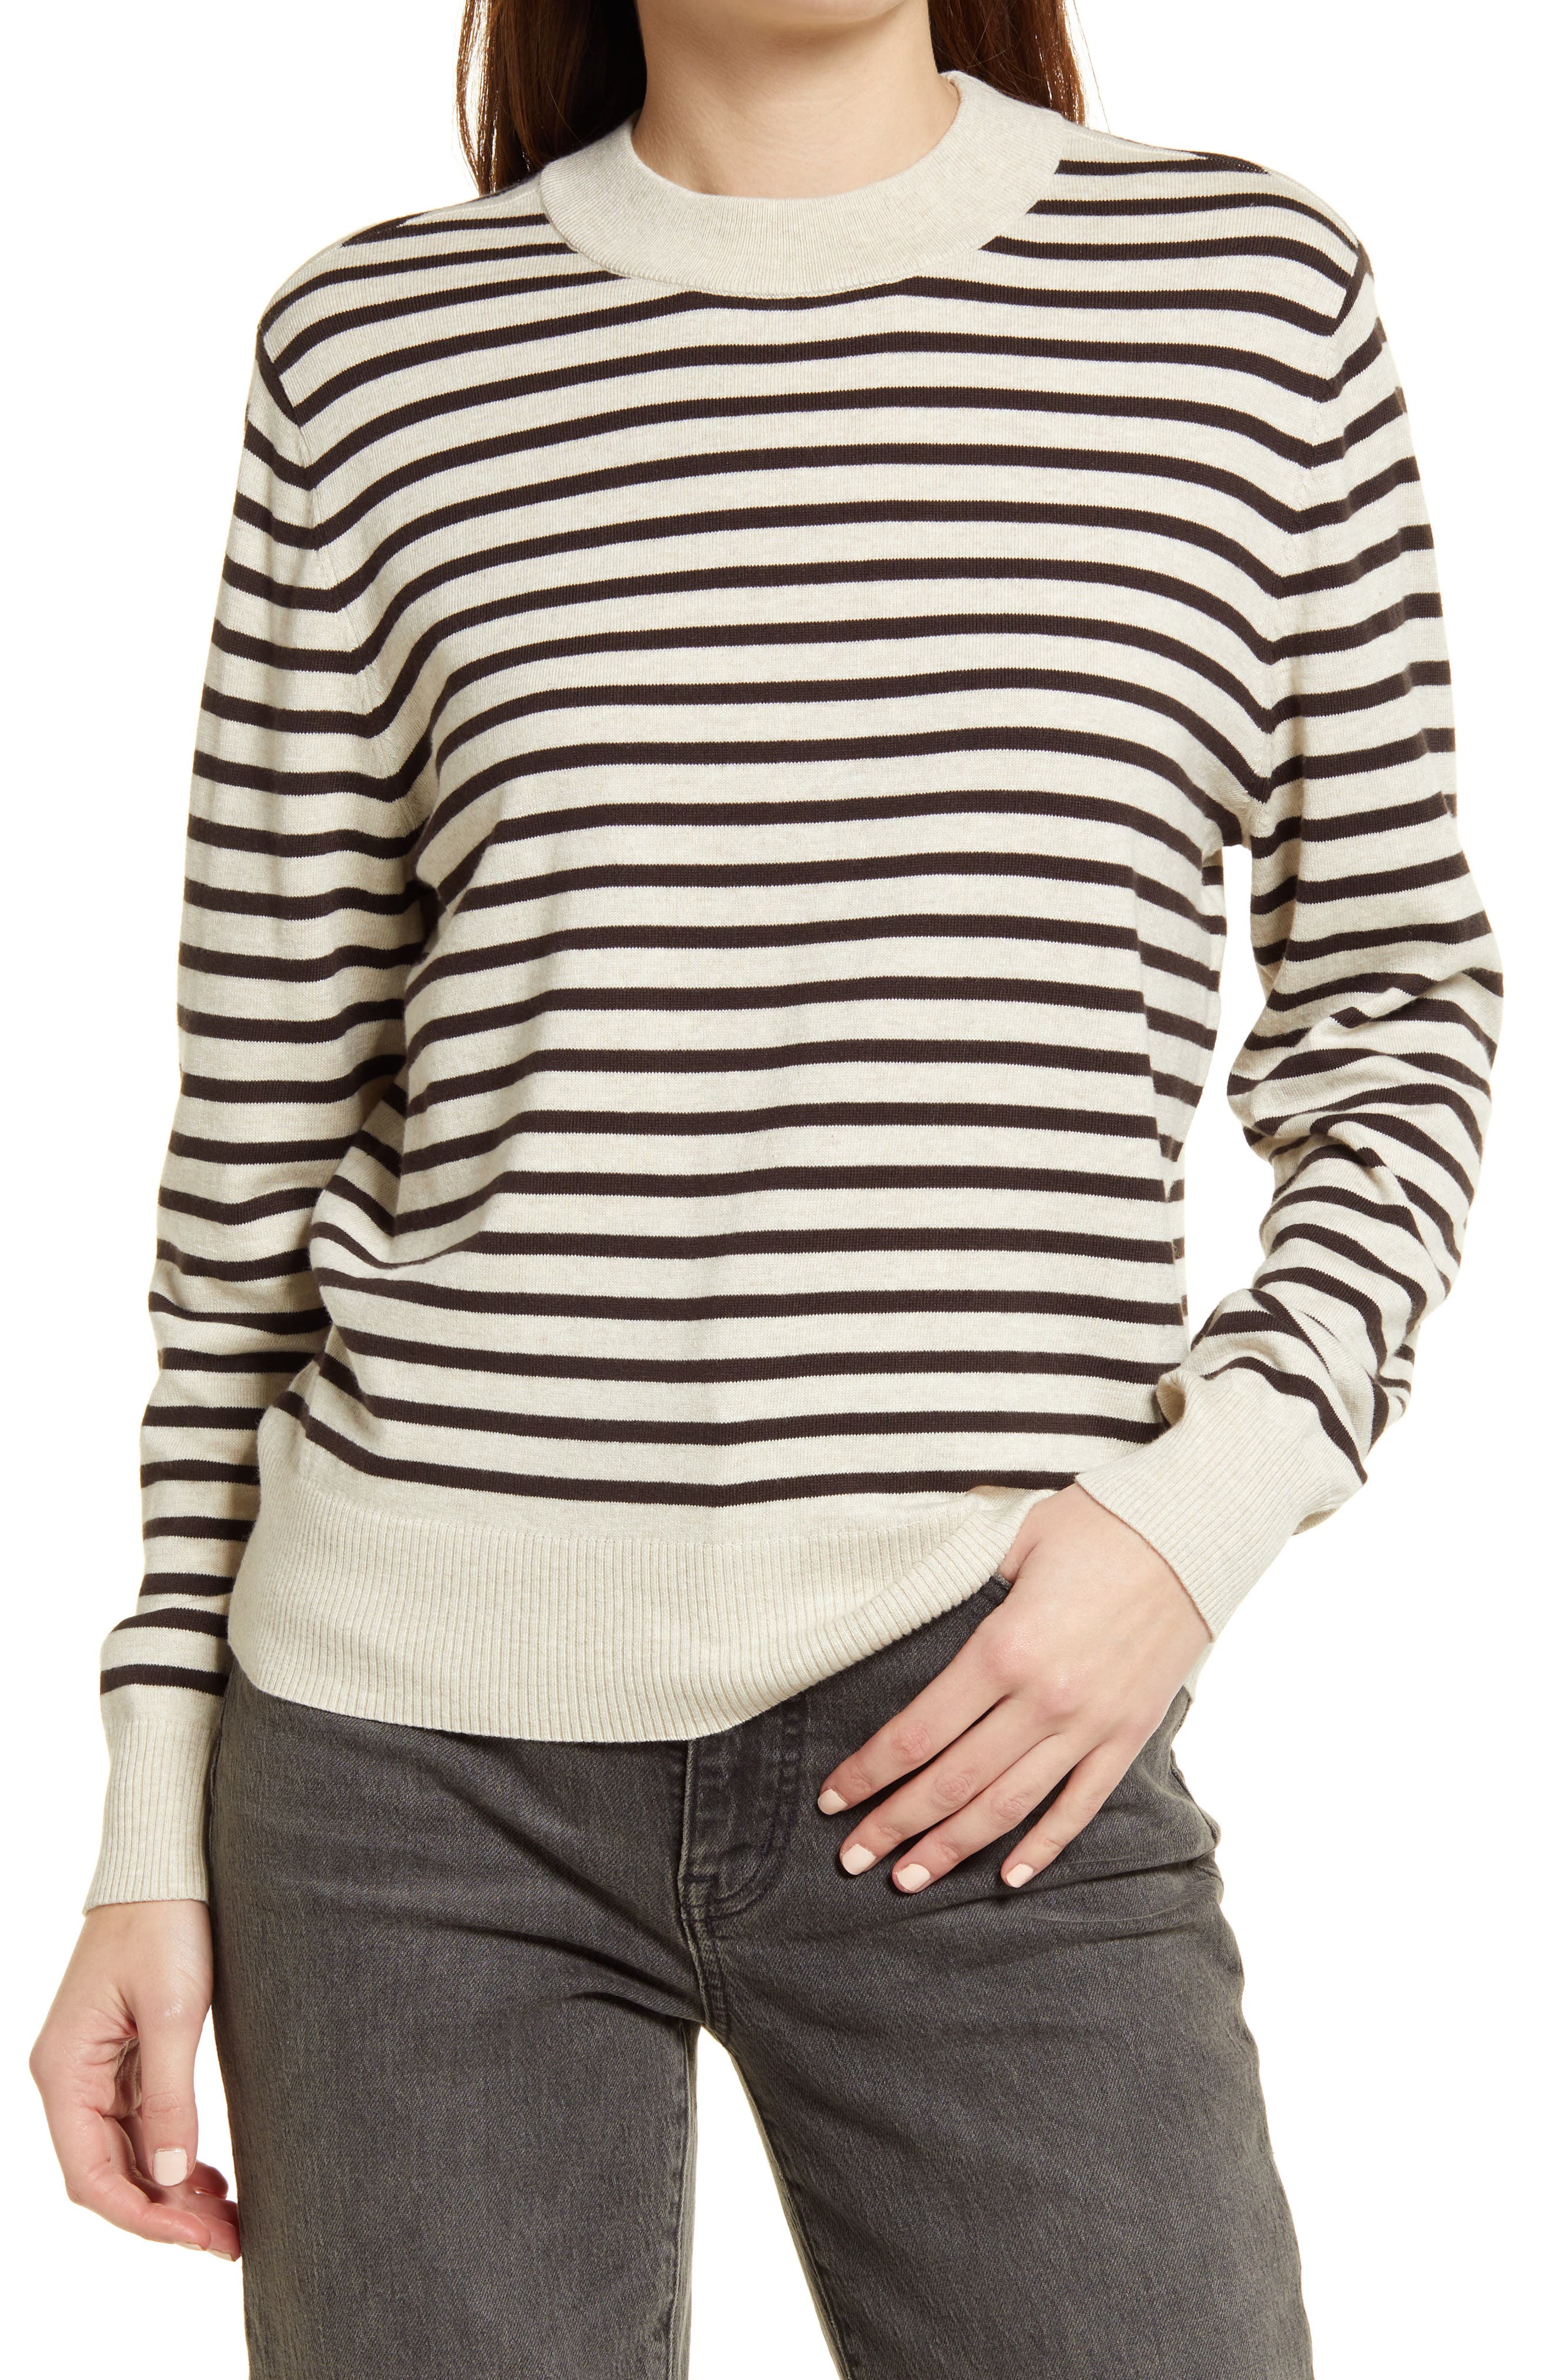 Sweater Women fashion New Sweet Rainbow stripe Round collar Long sleeves sweater